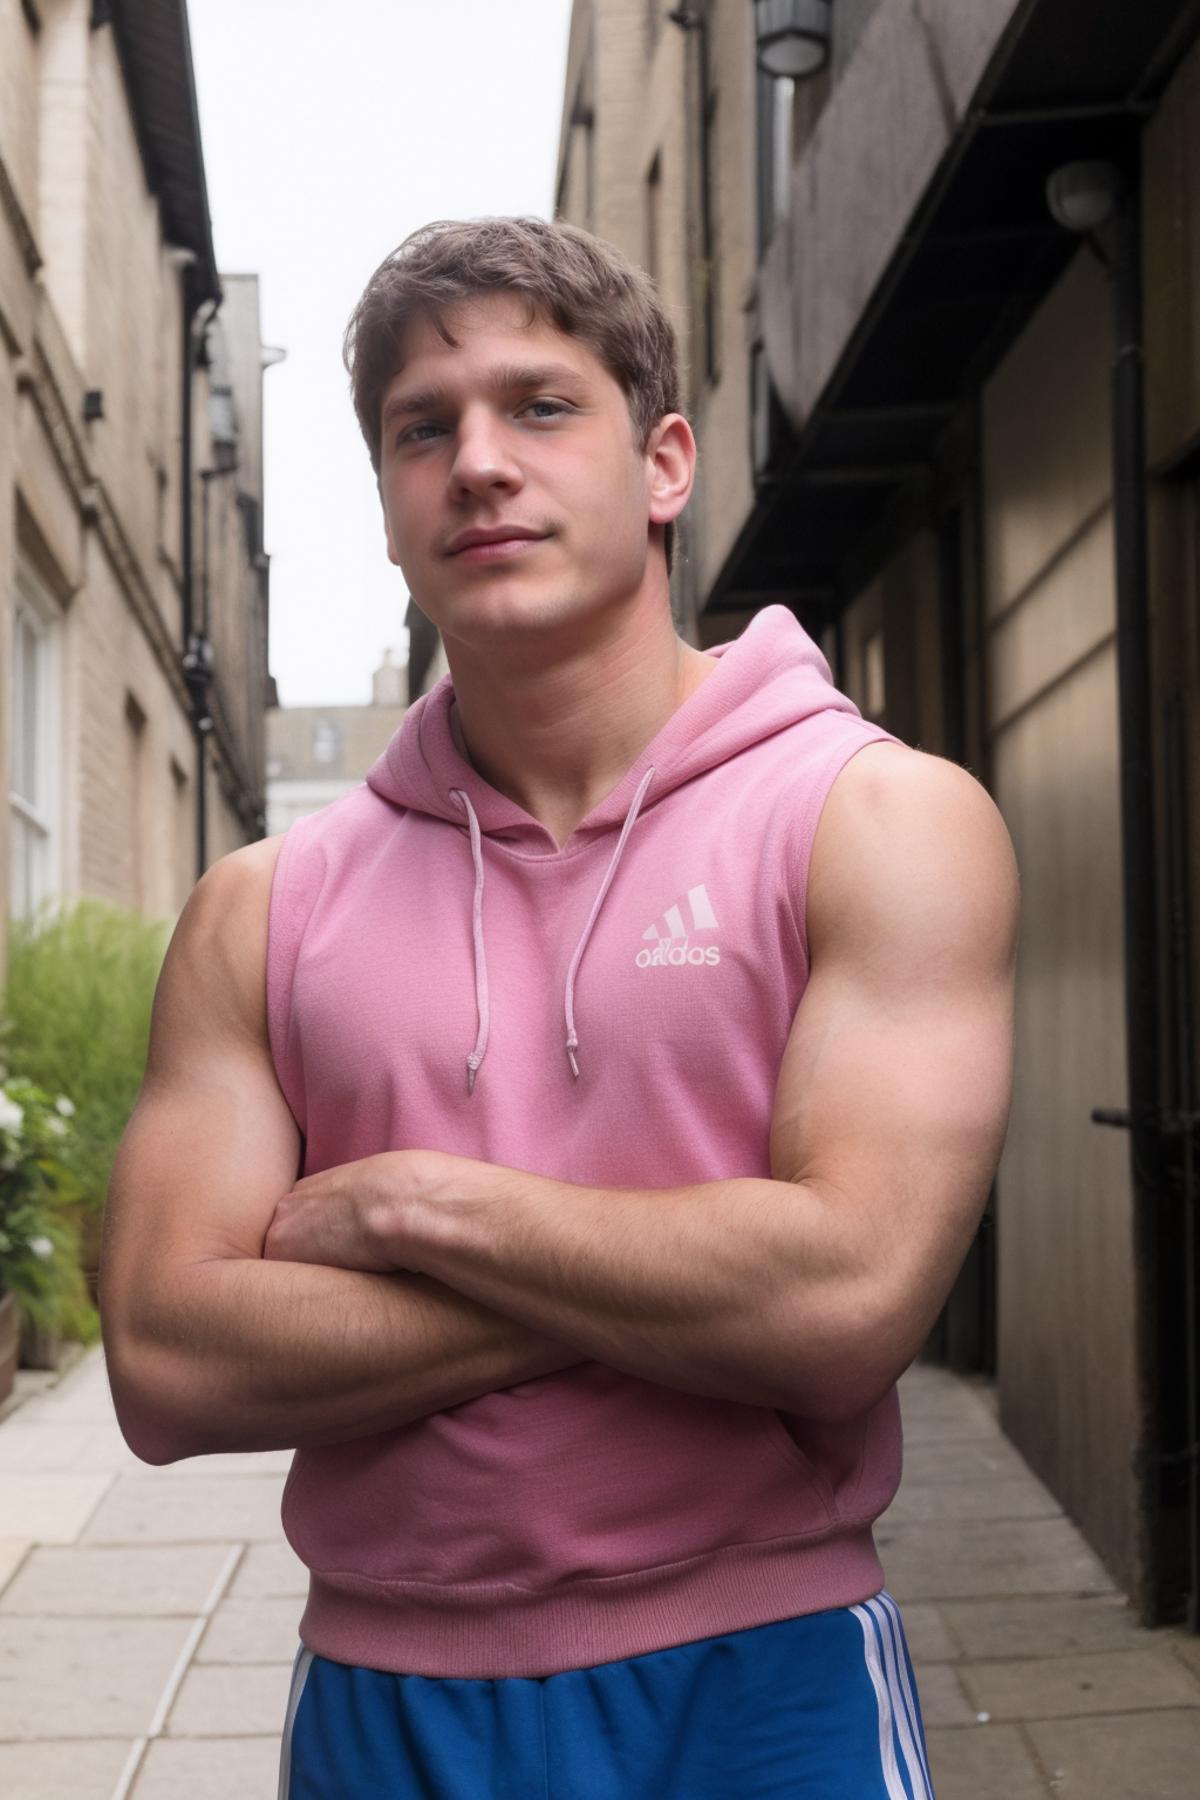 sc_brandon wearing a pink adidas sleeveless hoodie in a London alleyway shot by Bruce Weber, medium shot photo <lora:sc_br...